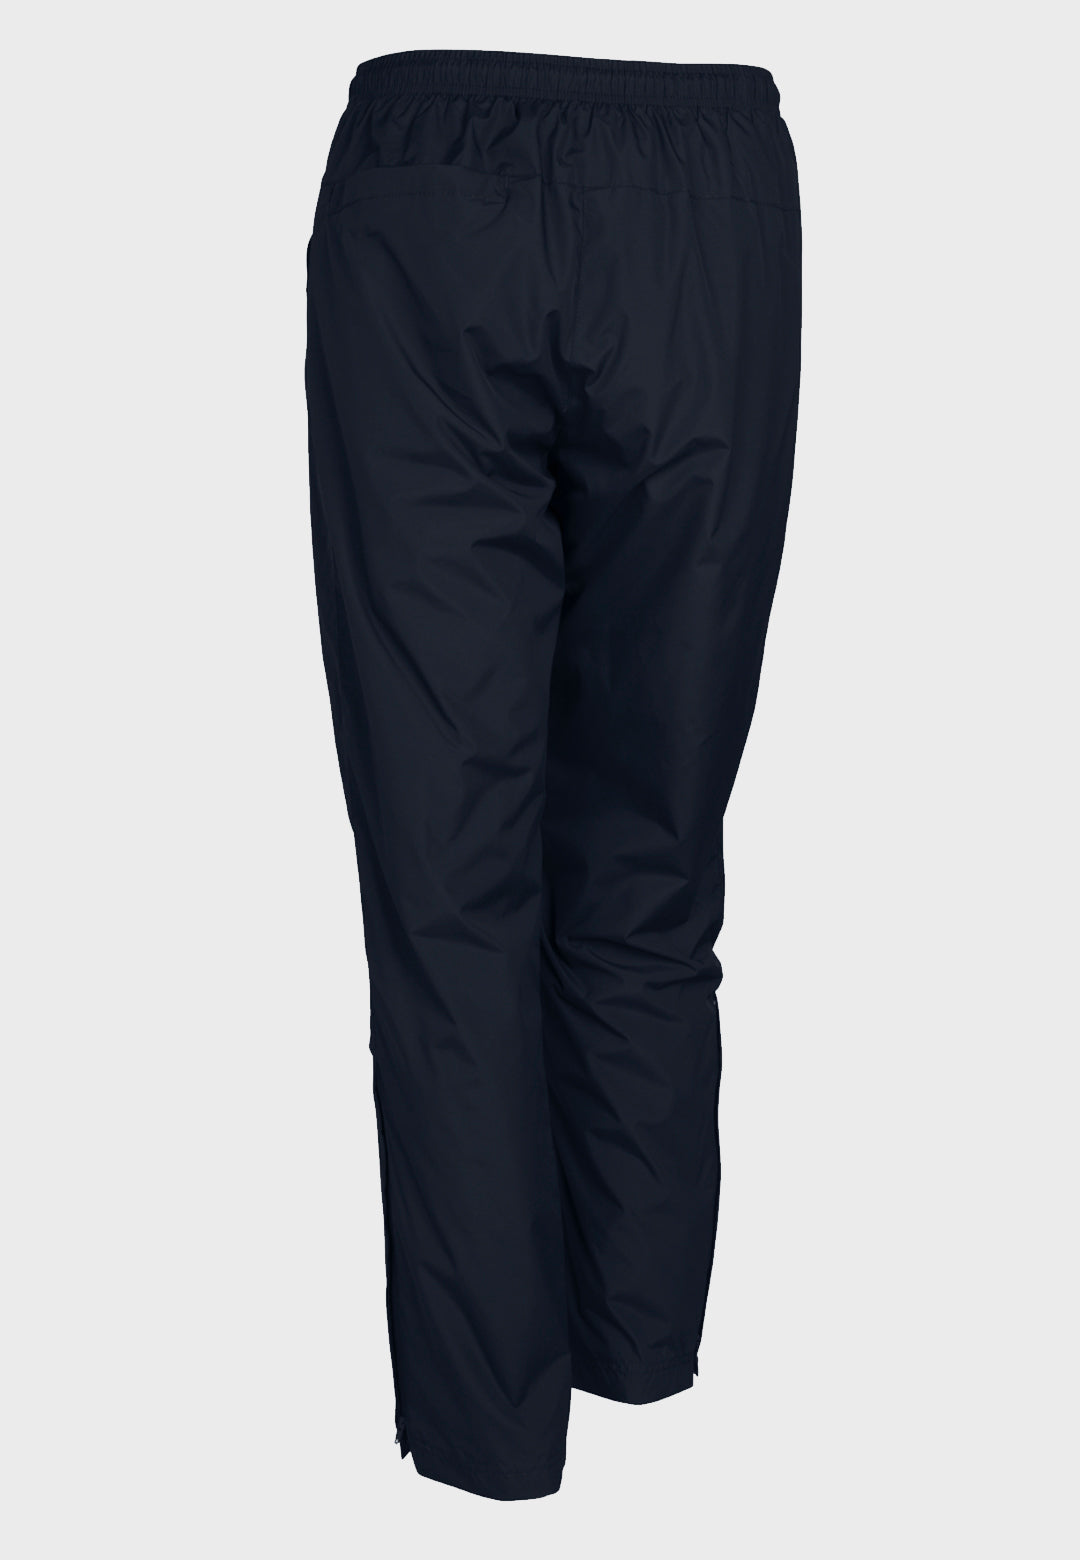 L & B Farms Sport-Tek® Black Pull-On Wind Pant (Unisex) - Adult + Youth sizes